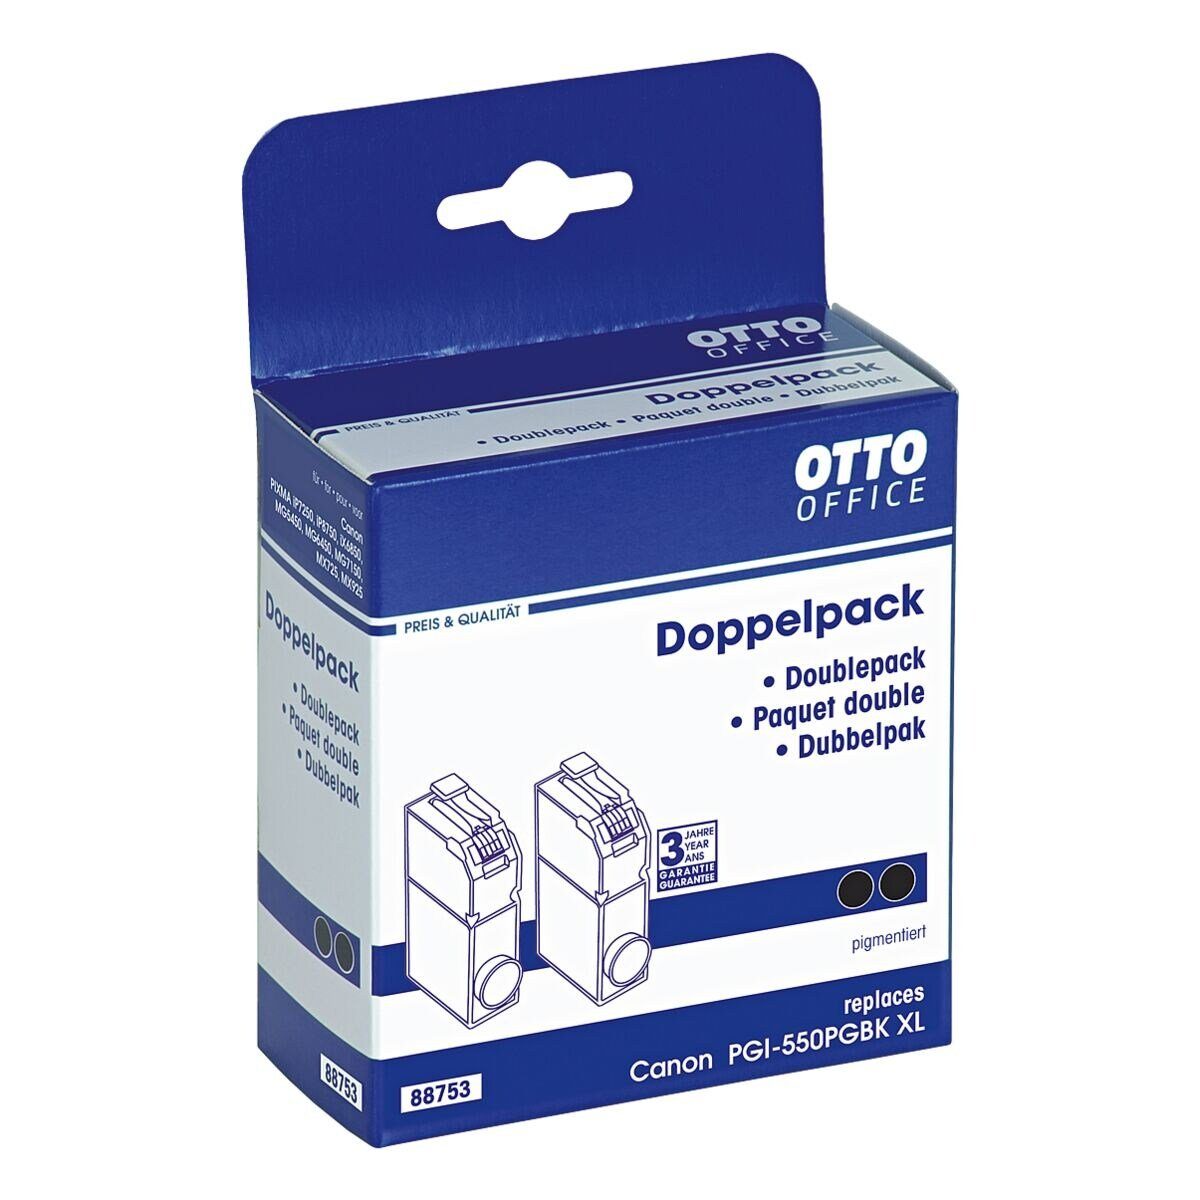 Otto Office  Office PGI-550 PGBK XL Tintenpatrone (Doppelpack, 2-tlg., ersetzt Canon »PGI-550 PGBK XL«, schwarz) schwarz, schwarz